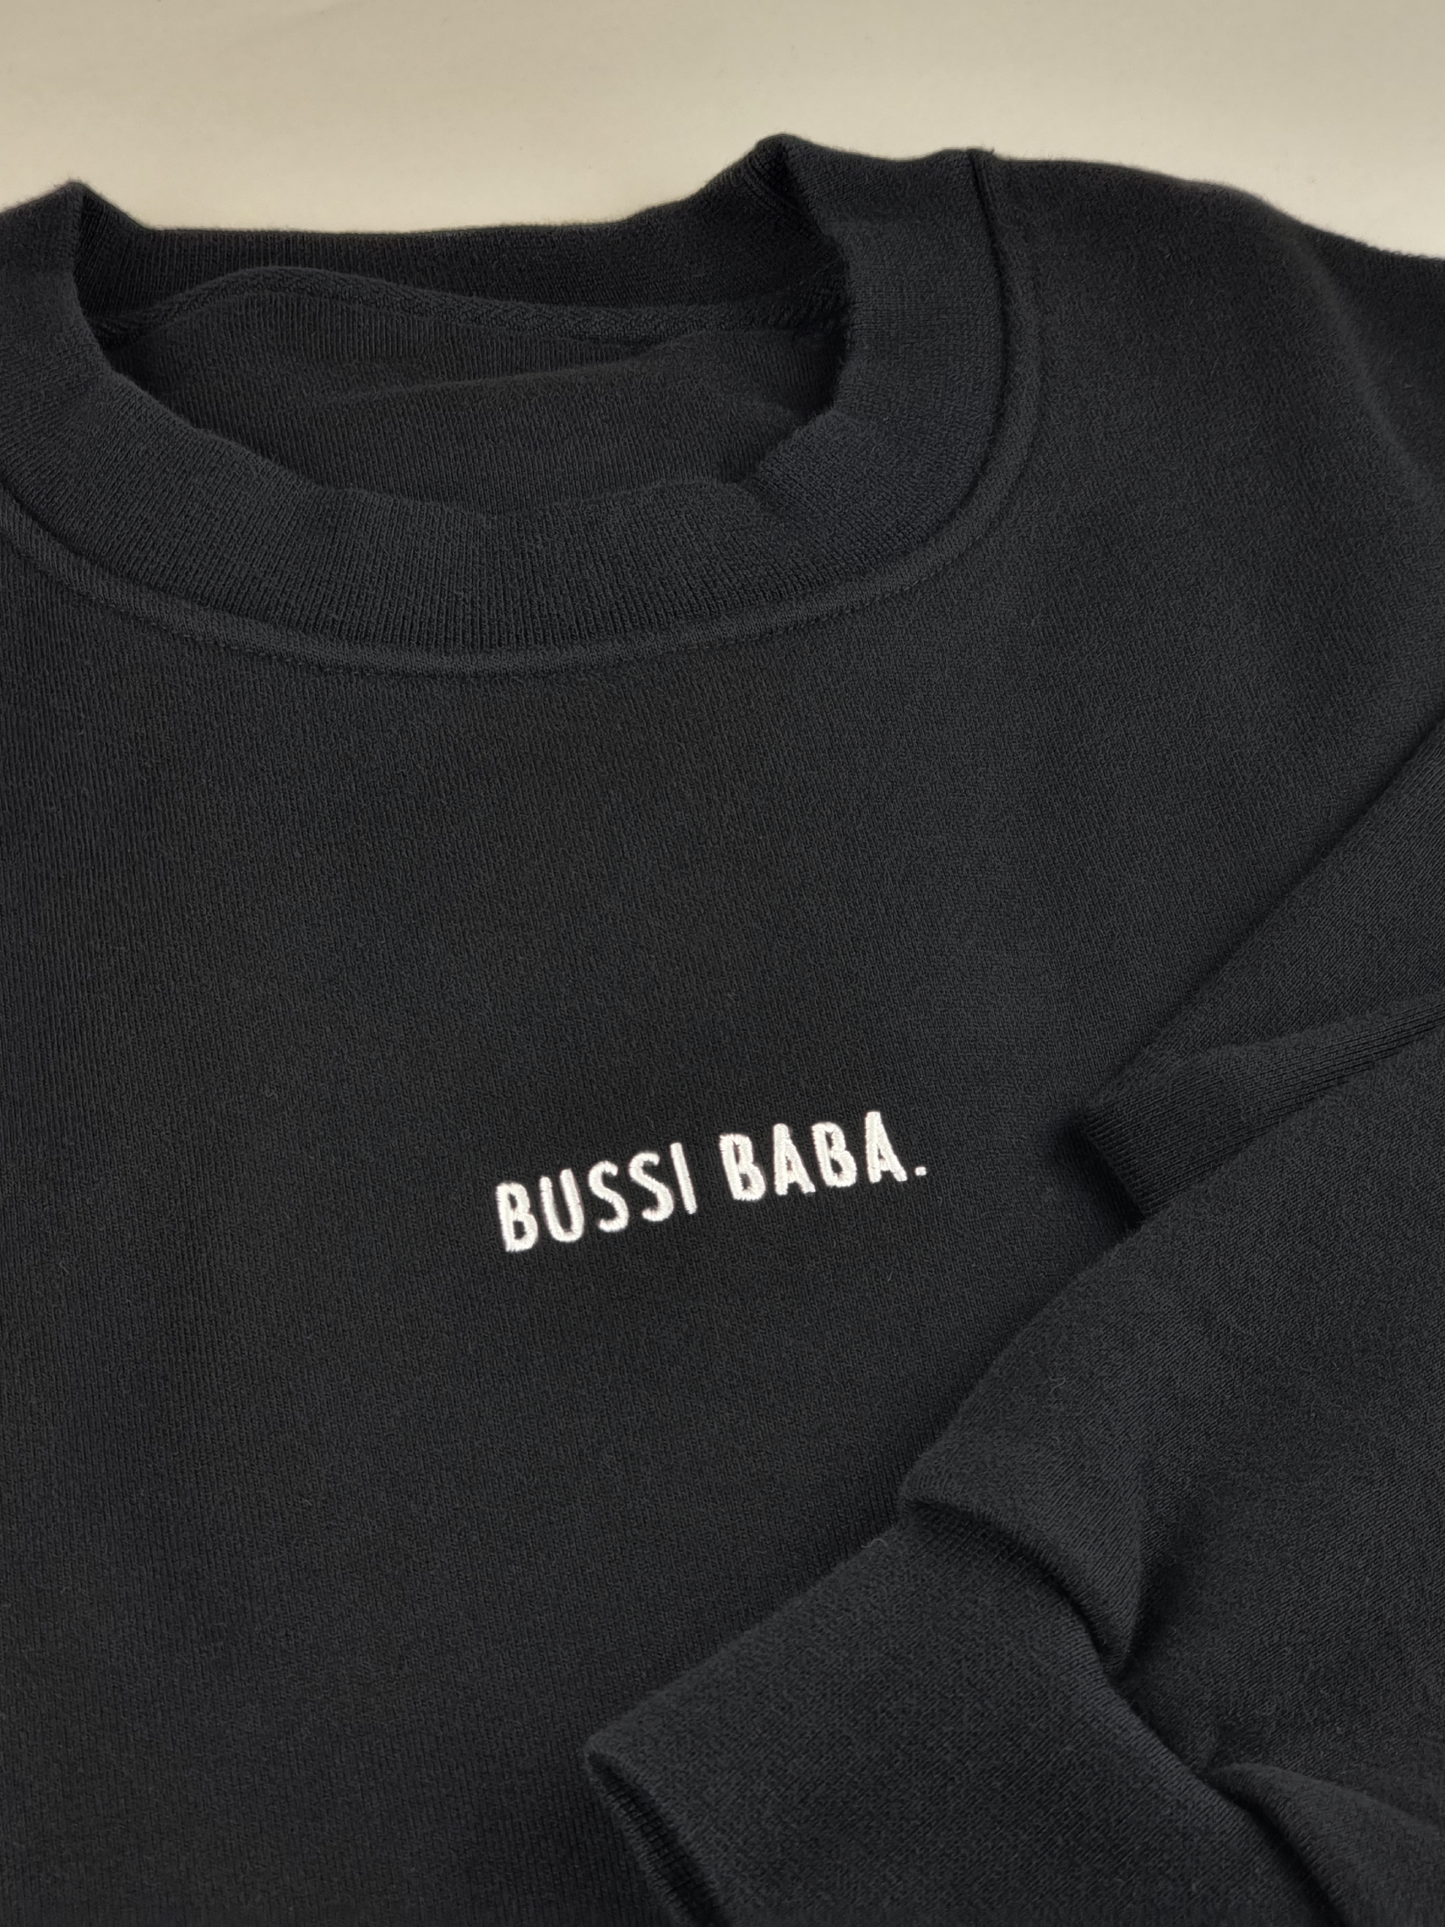 KITSCH BITCH Bussi Baba Sweater Black